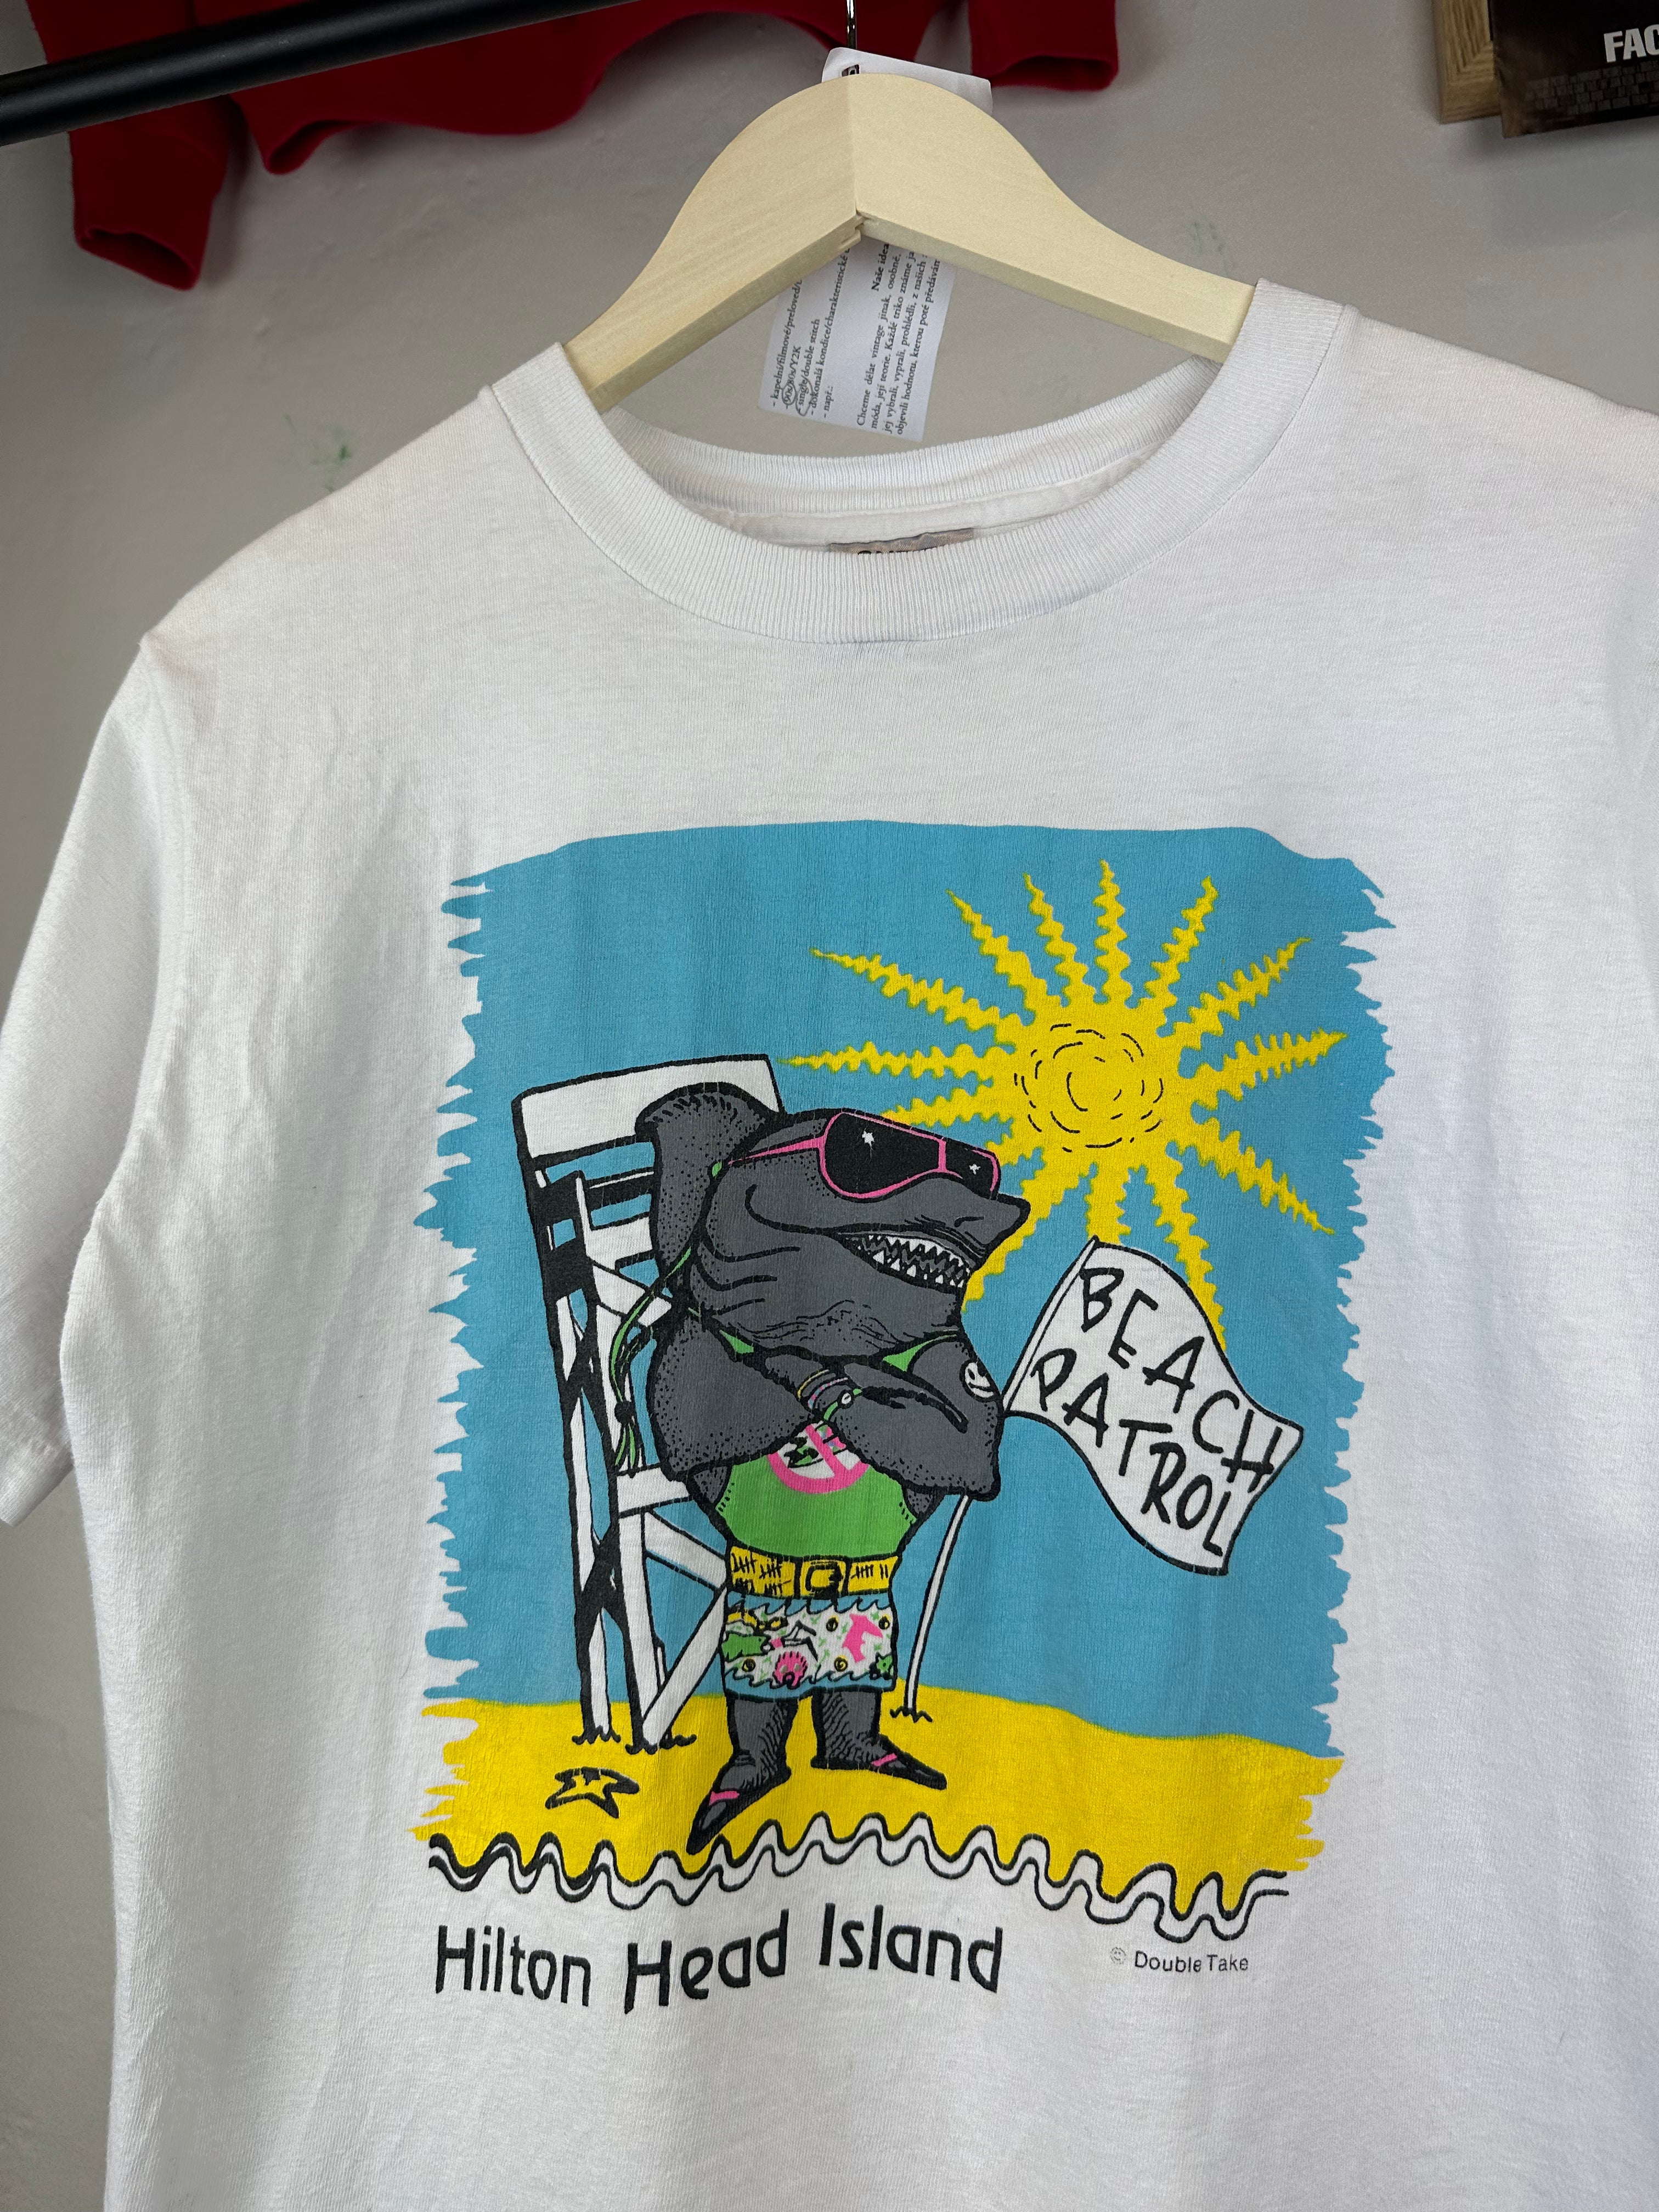 Vintage Beach Patrol 80s/90s t-shirt - size M